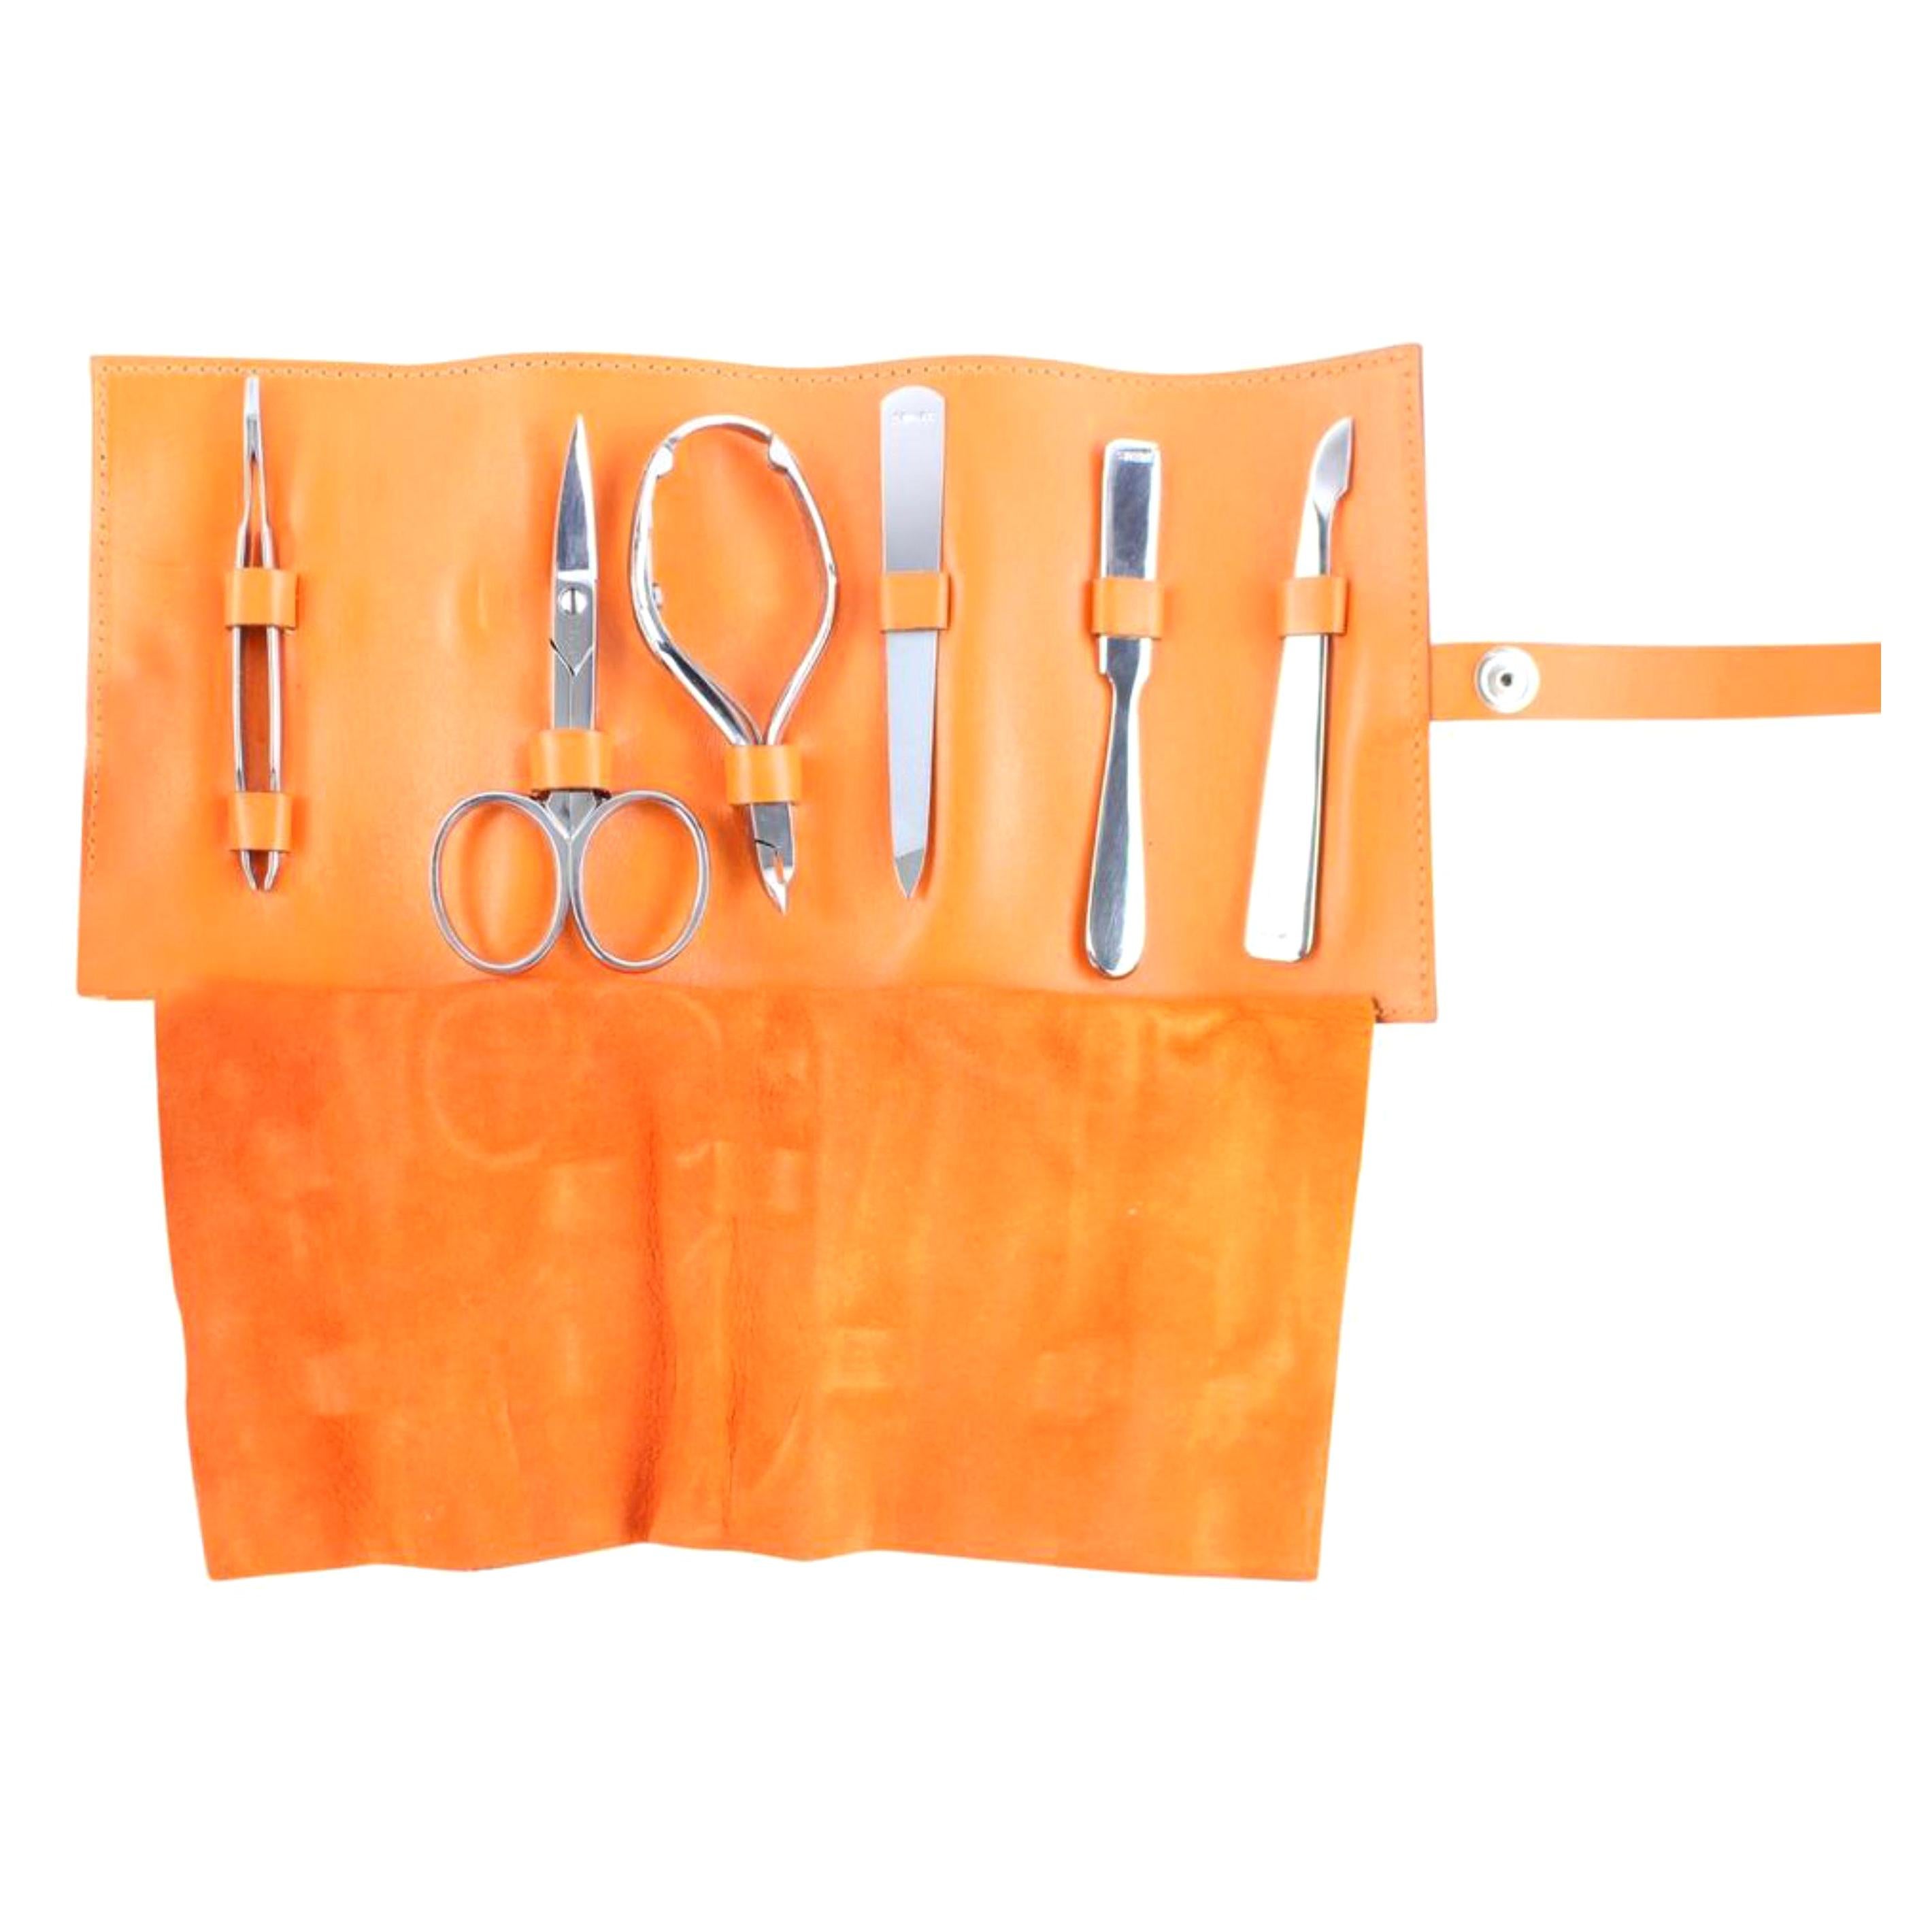 Hermès Nail Care Set 2hr1227 Orange Leather Clutch For Sale